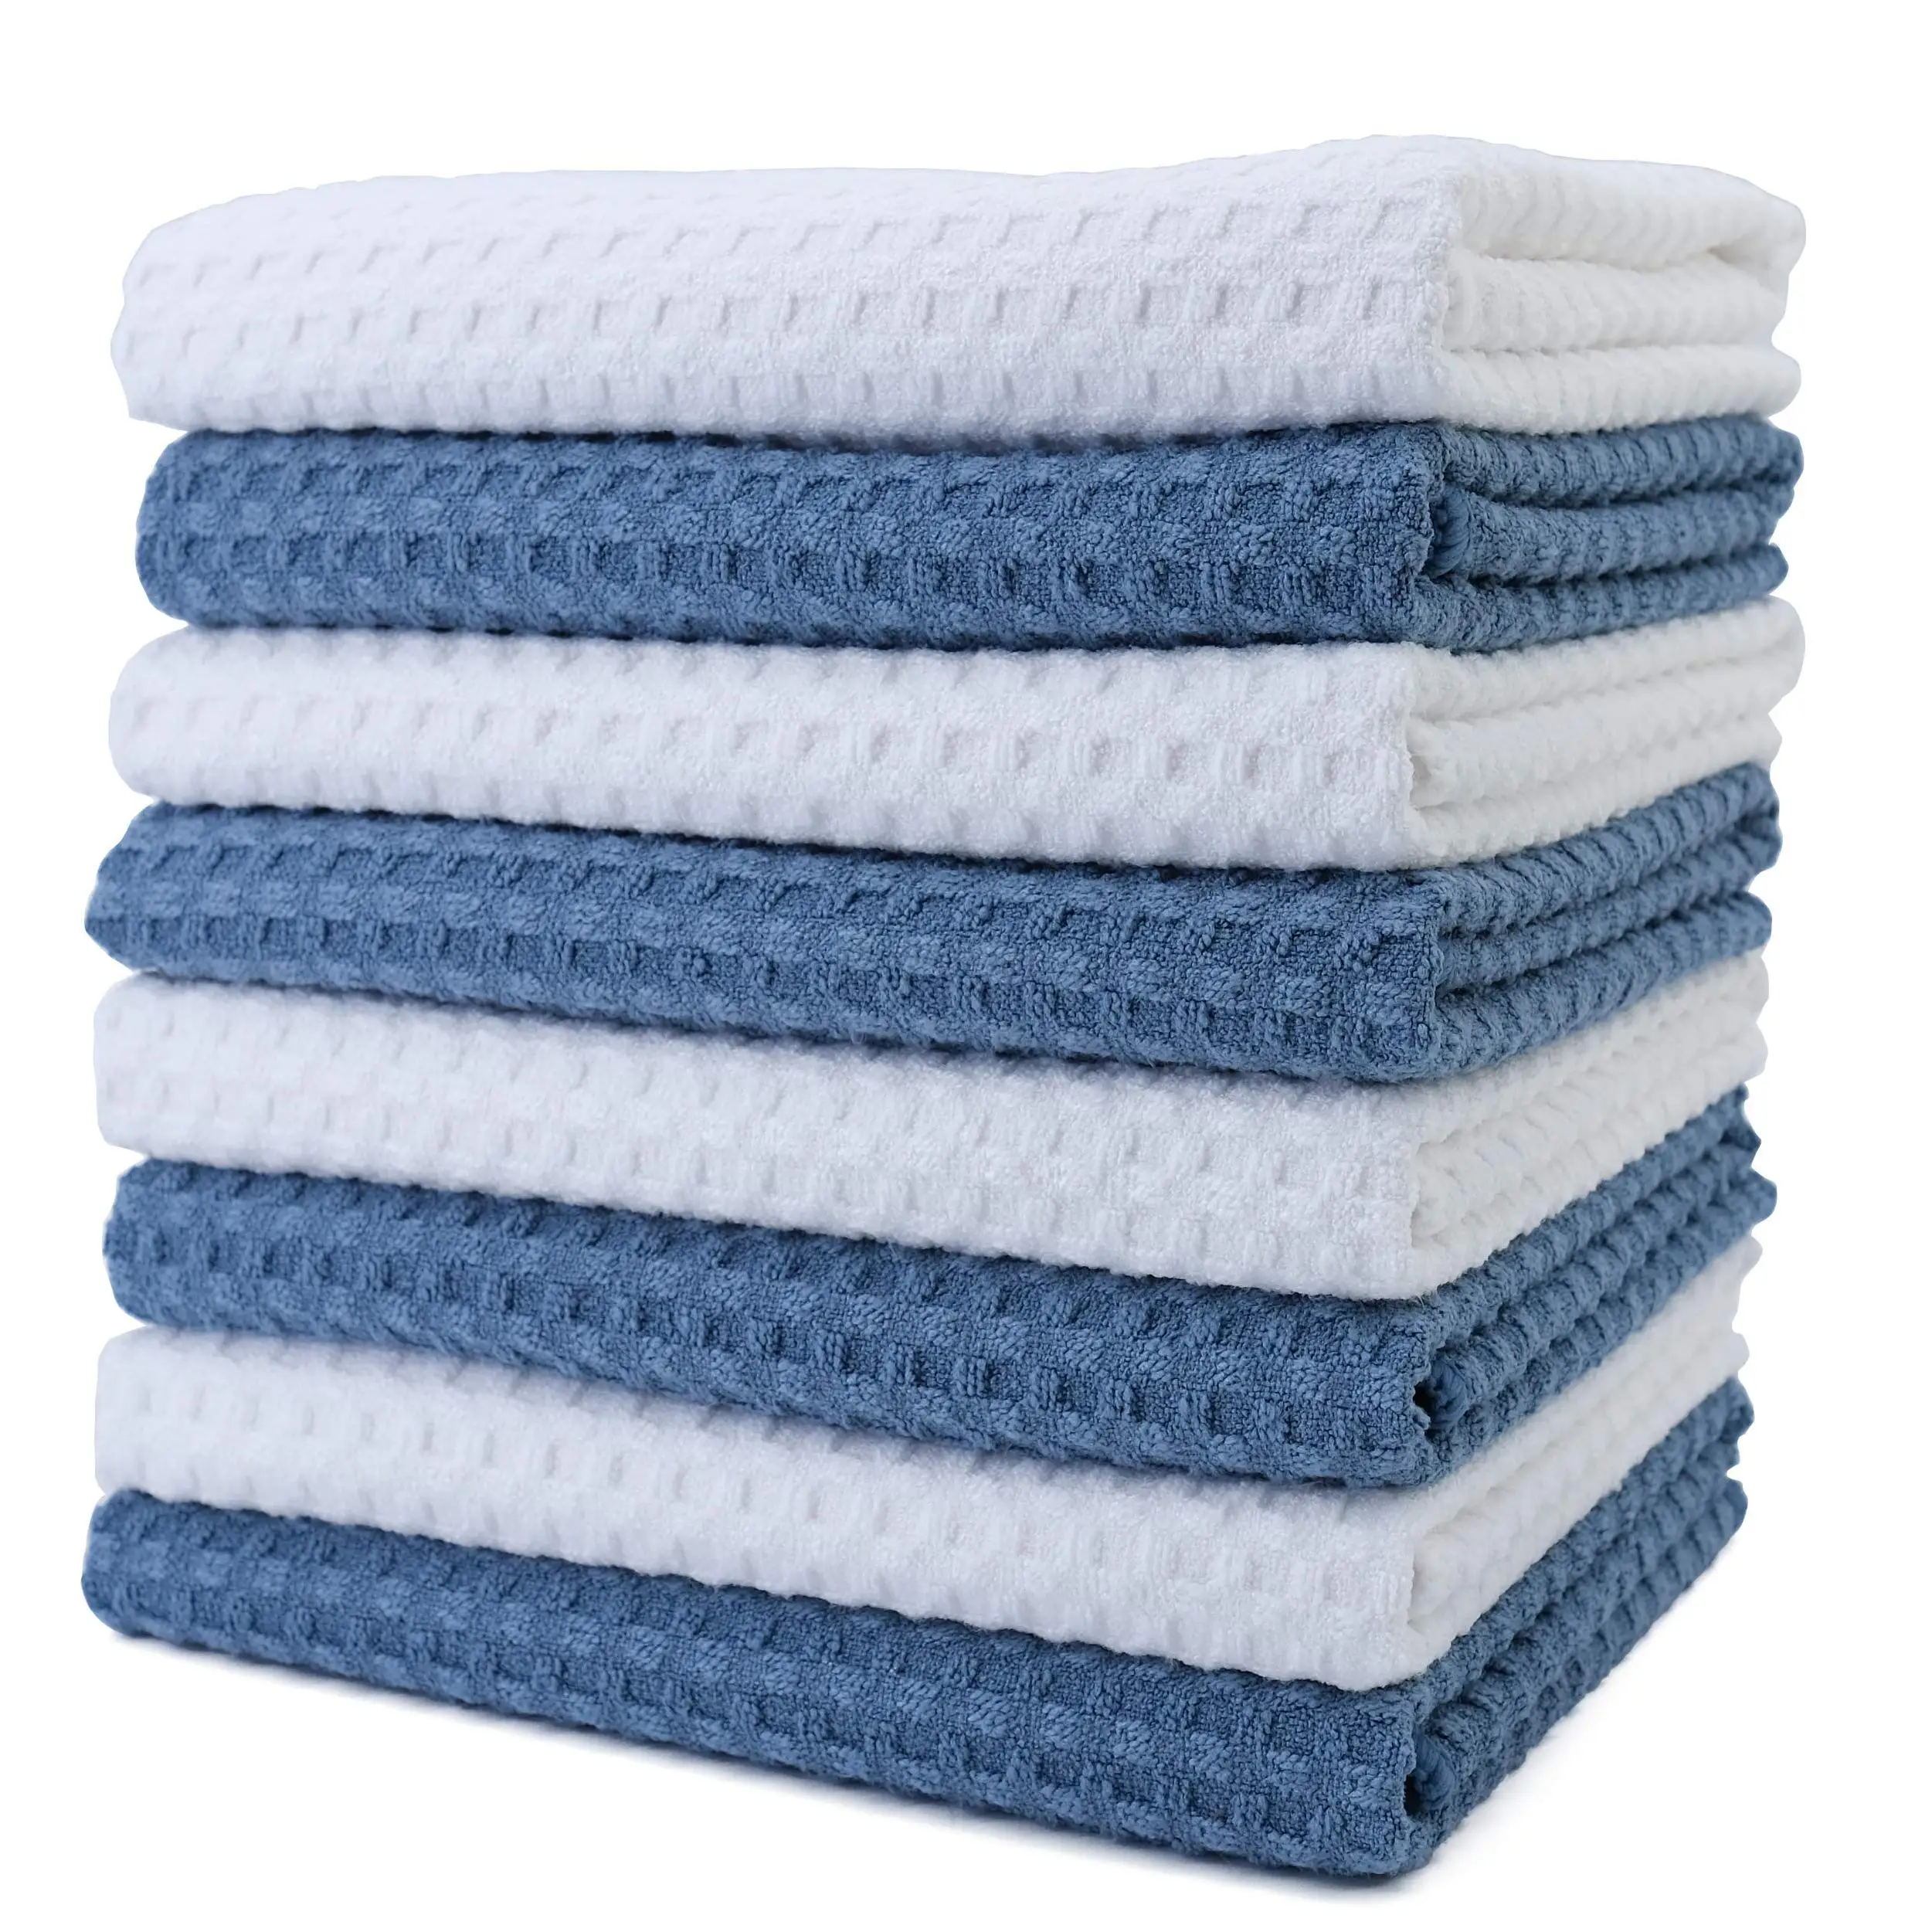 instock~ kimteny 12 Pack Kitchen Cloth Dish Towels, Premium